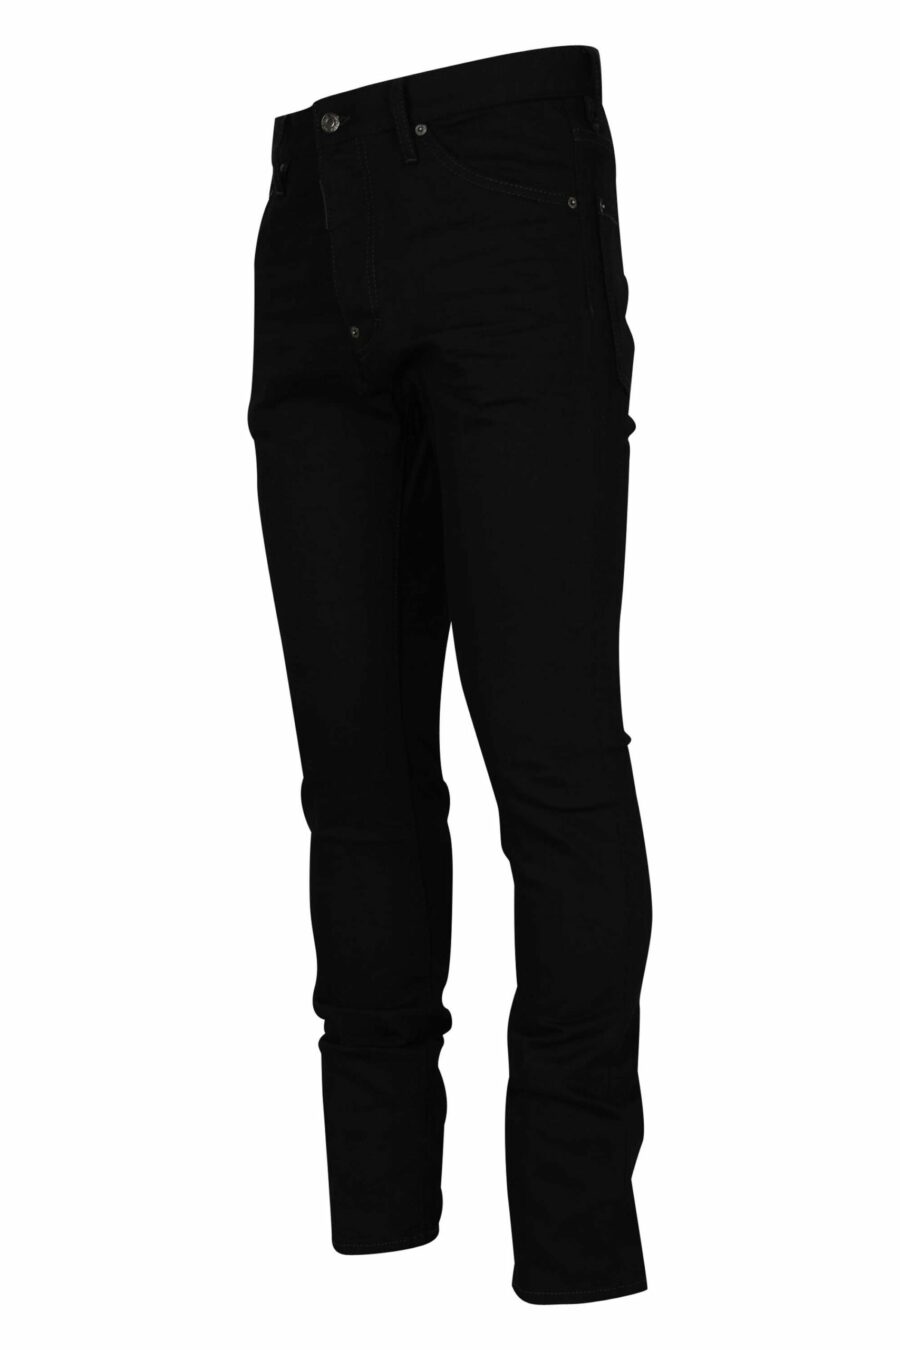 Pantalón negro "cool guy jean" - 8054148284039 1 scaled